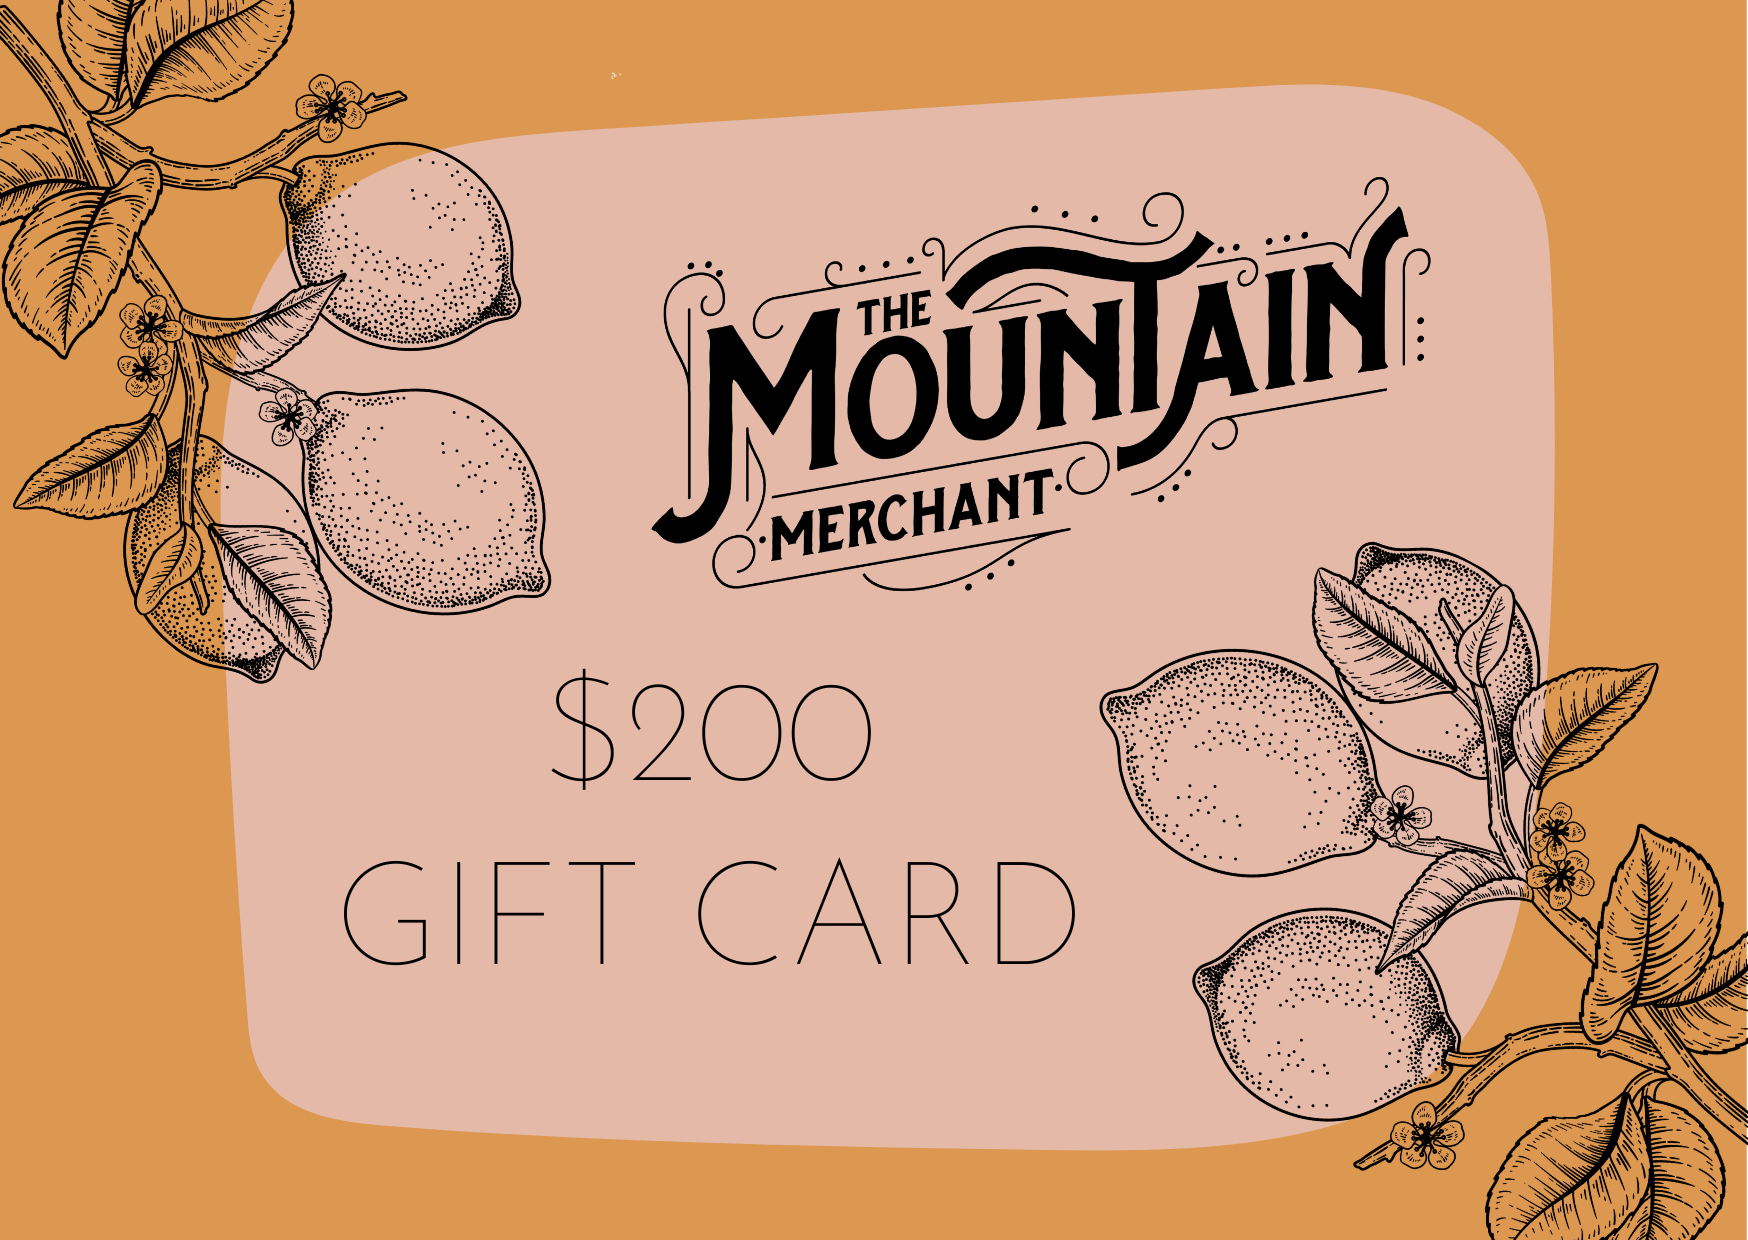 The Mountain Merchant - Gift Card $200 -The Mountain Merchant -The Mountain Merchant